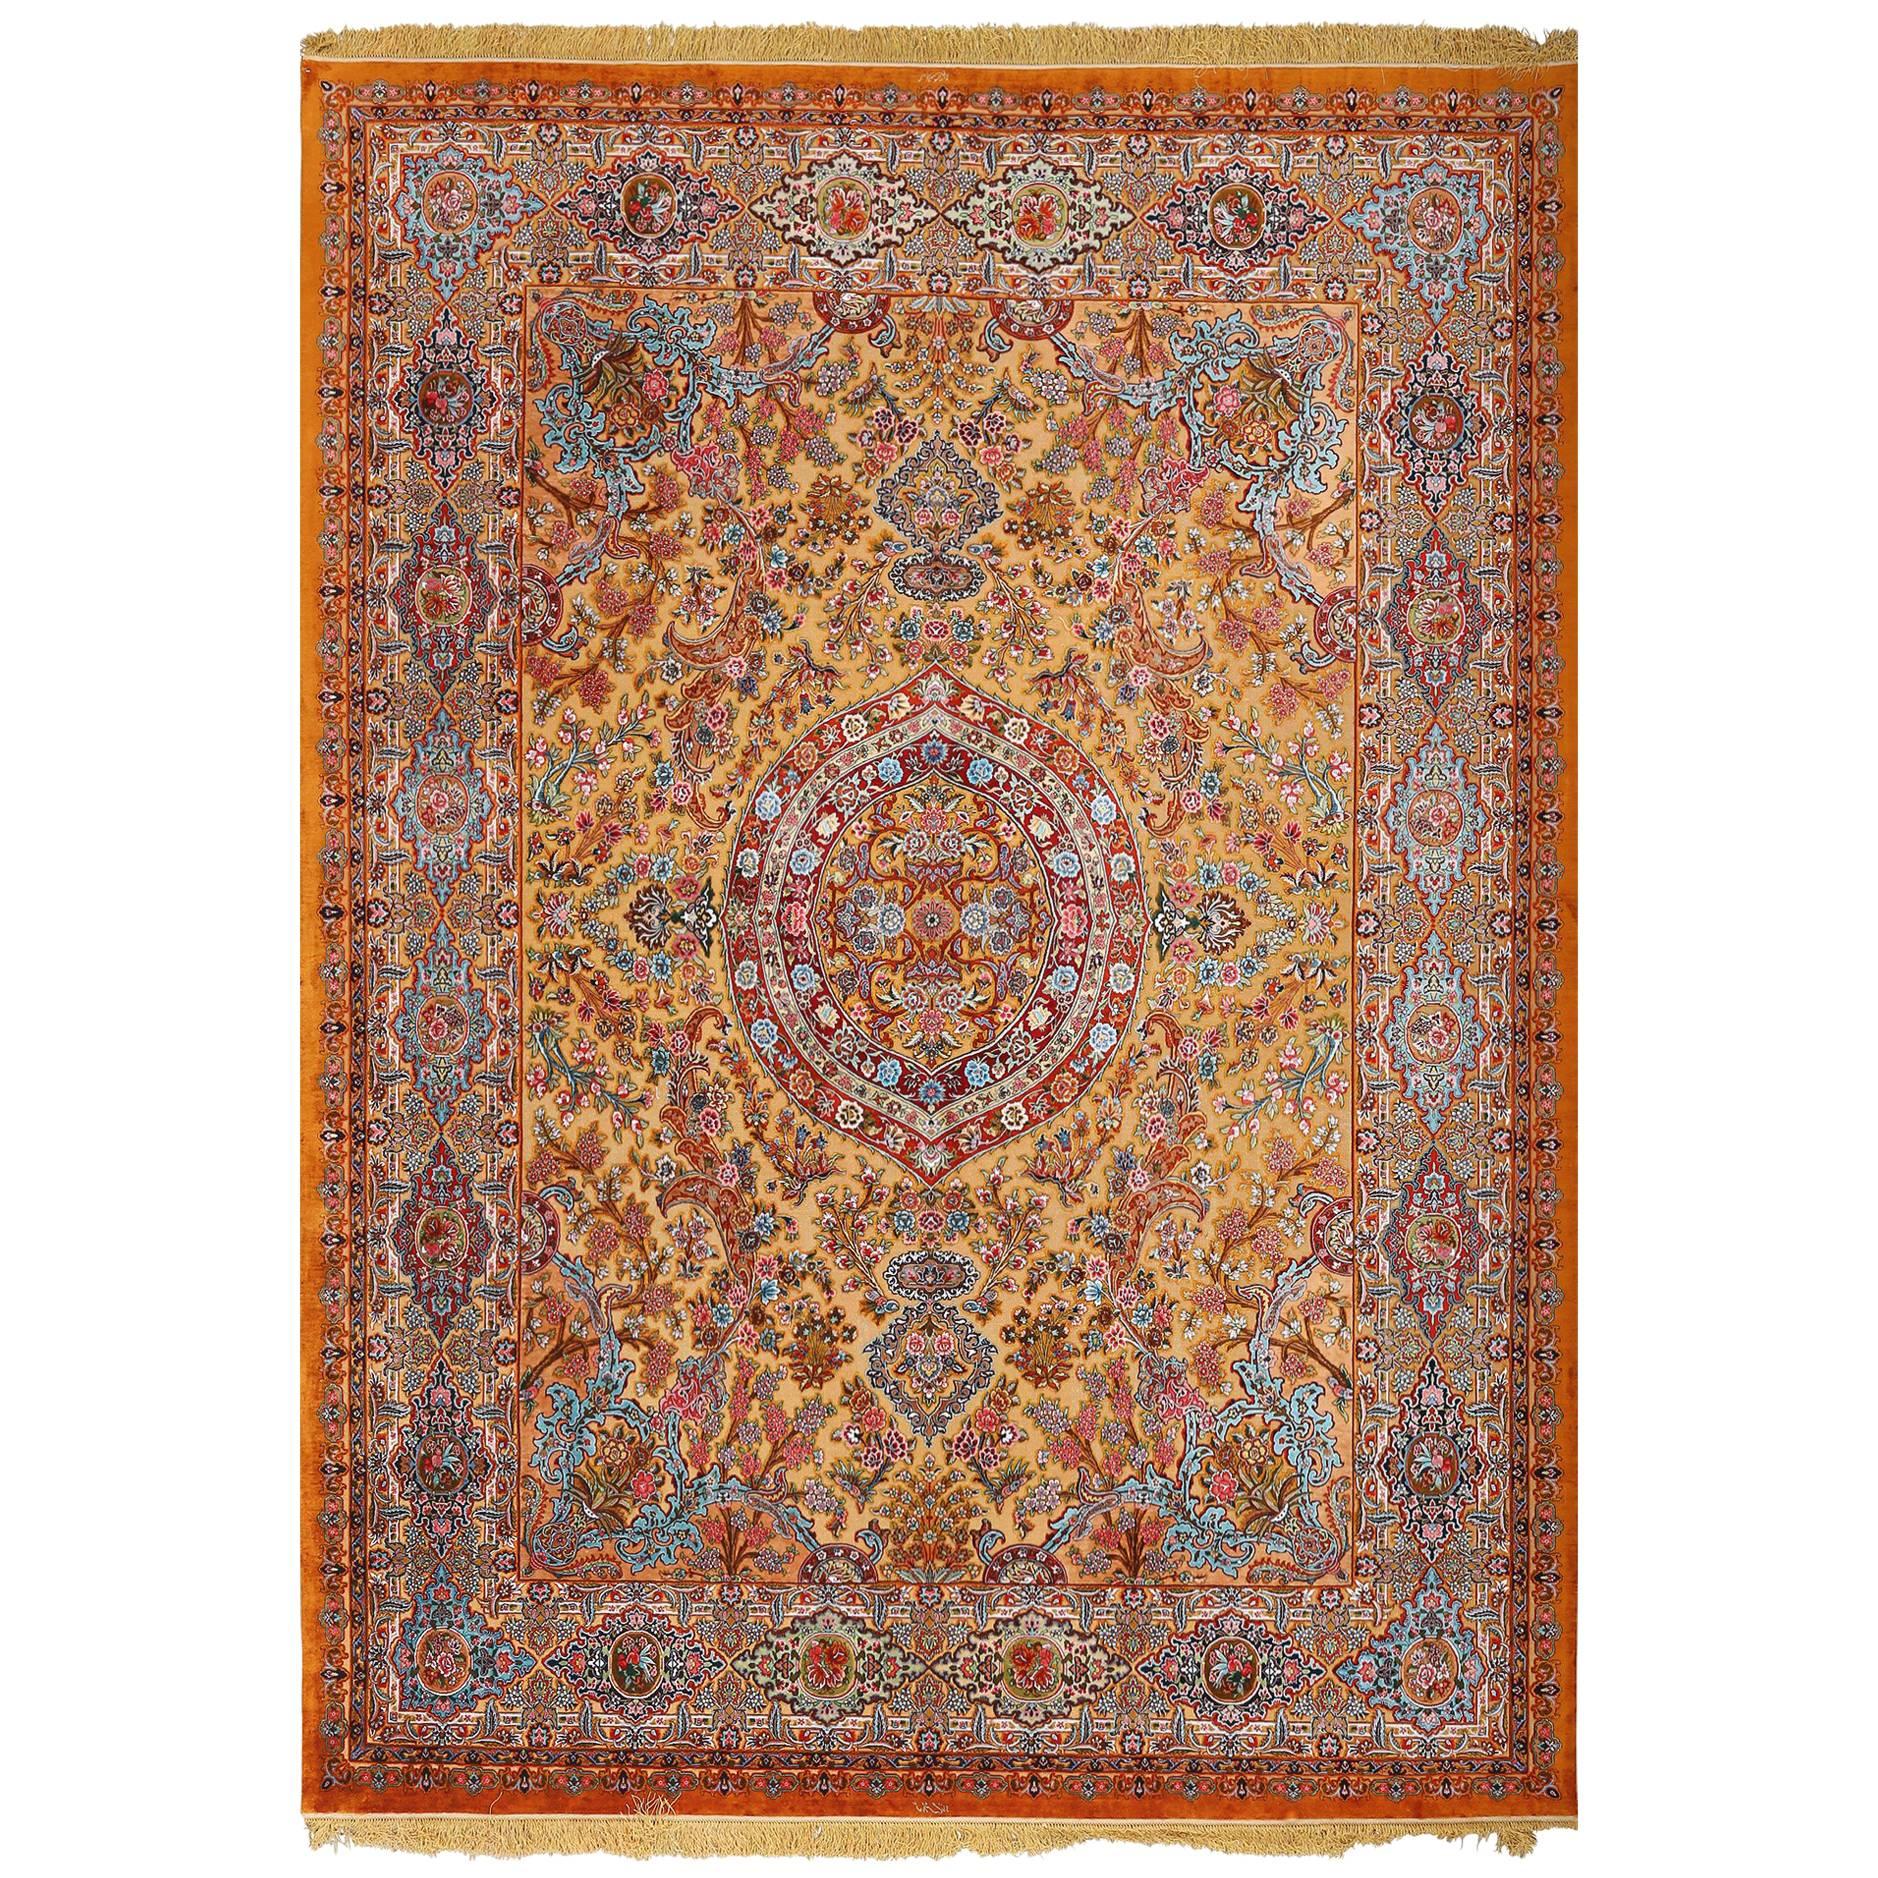 Fine Silk and Gold Thread Vintage Tabriz Persian Rug